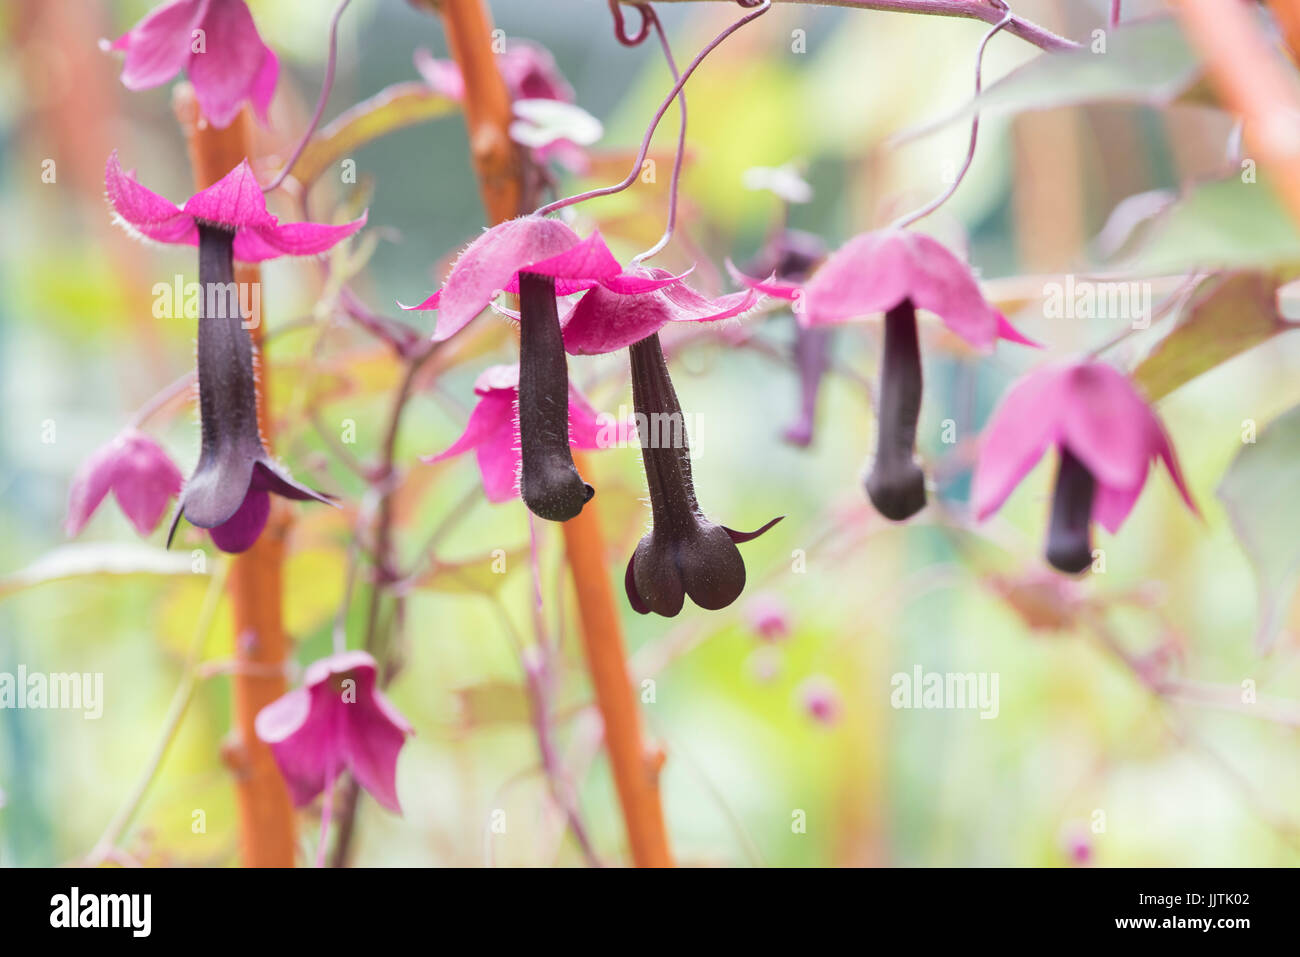 Rhodochiton atrosanguineus. Purple bell vine flowers. UK Stock Photo